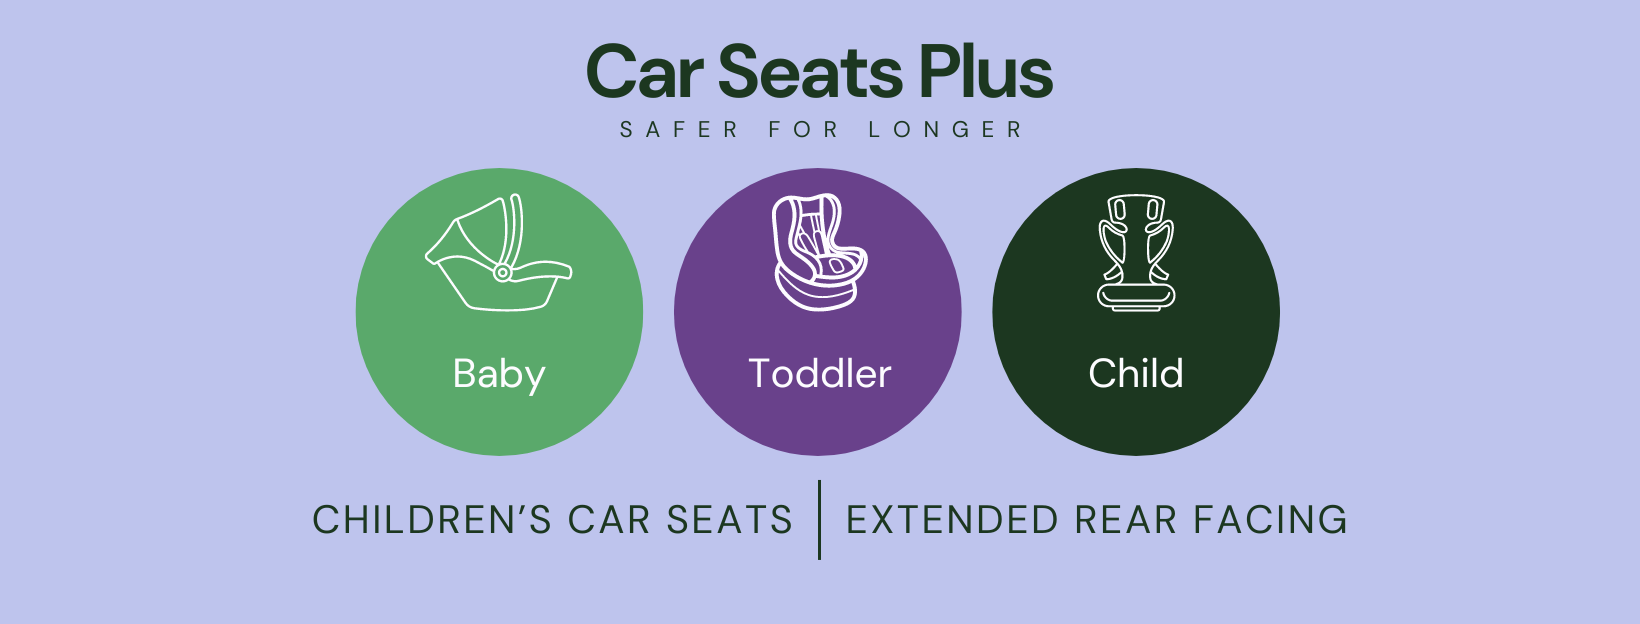 Car Seats Plus - Ensure your Precious Cargos Safety